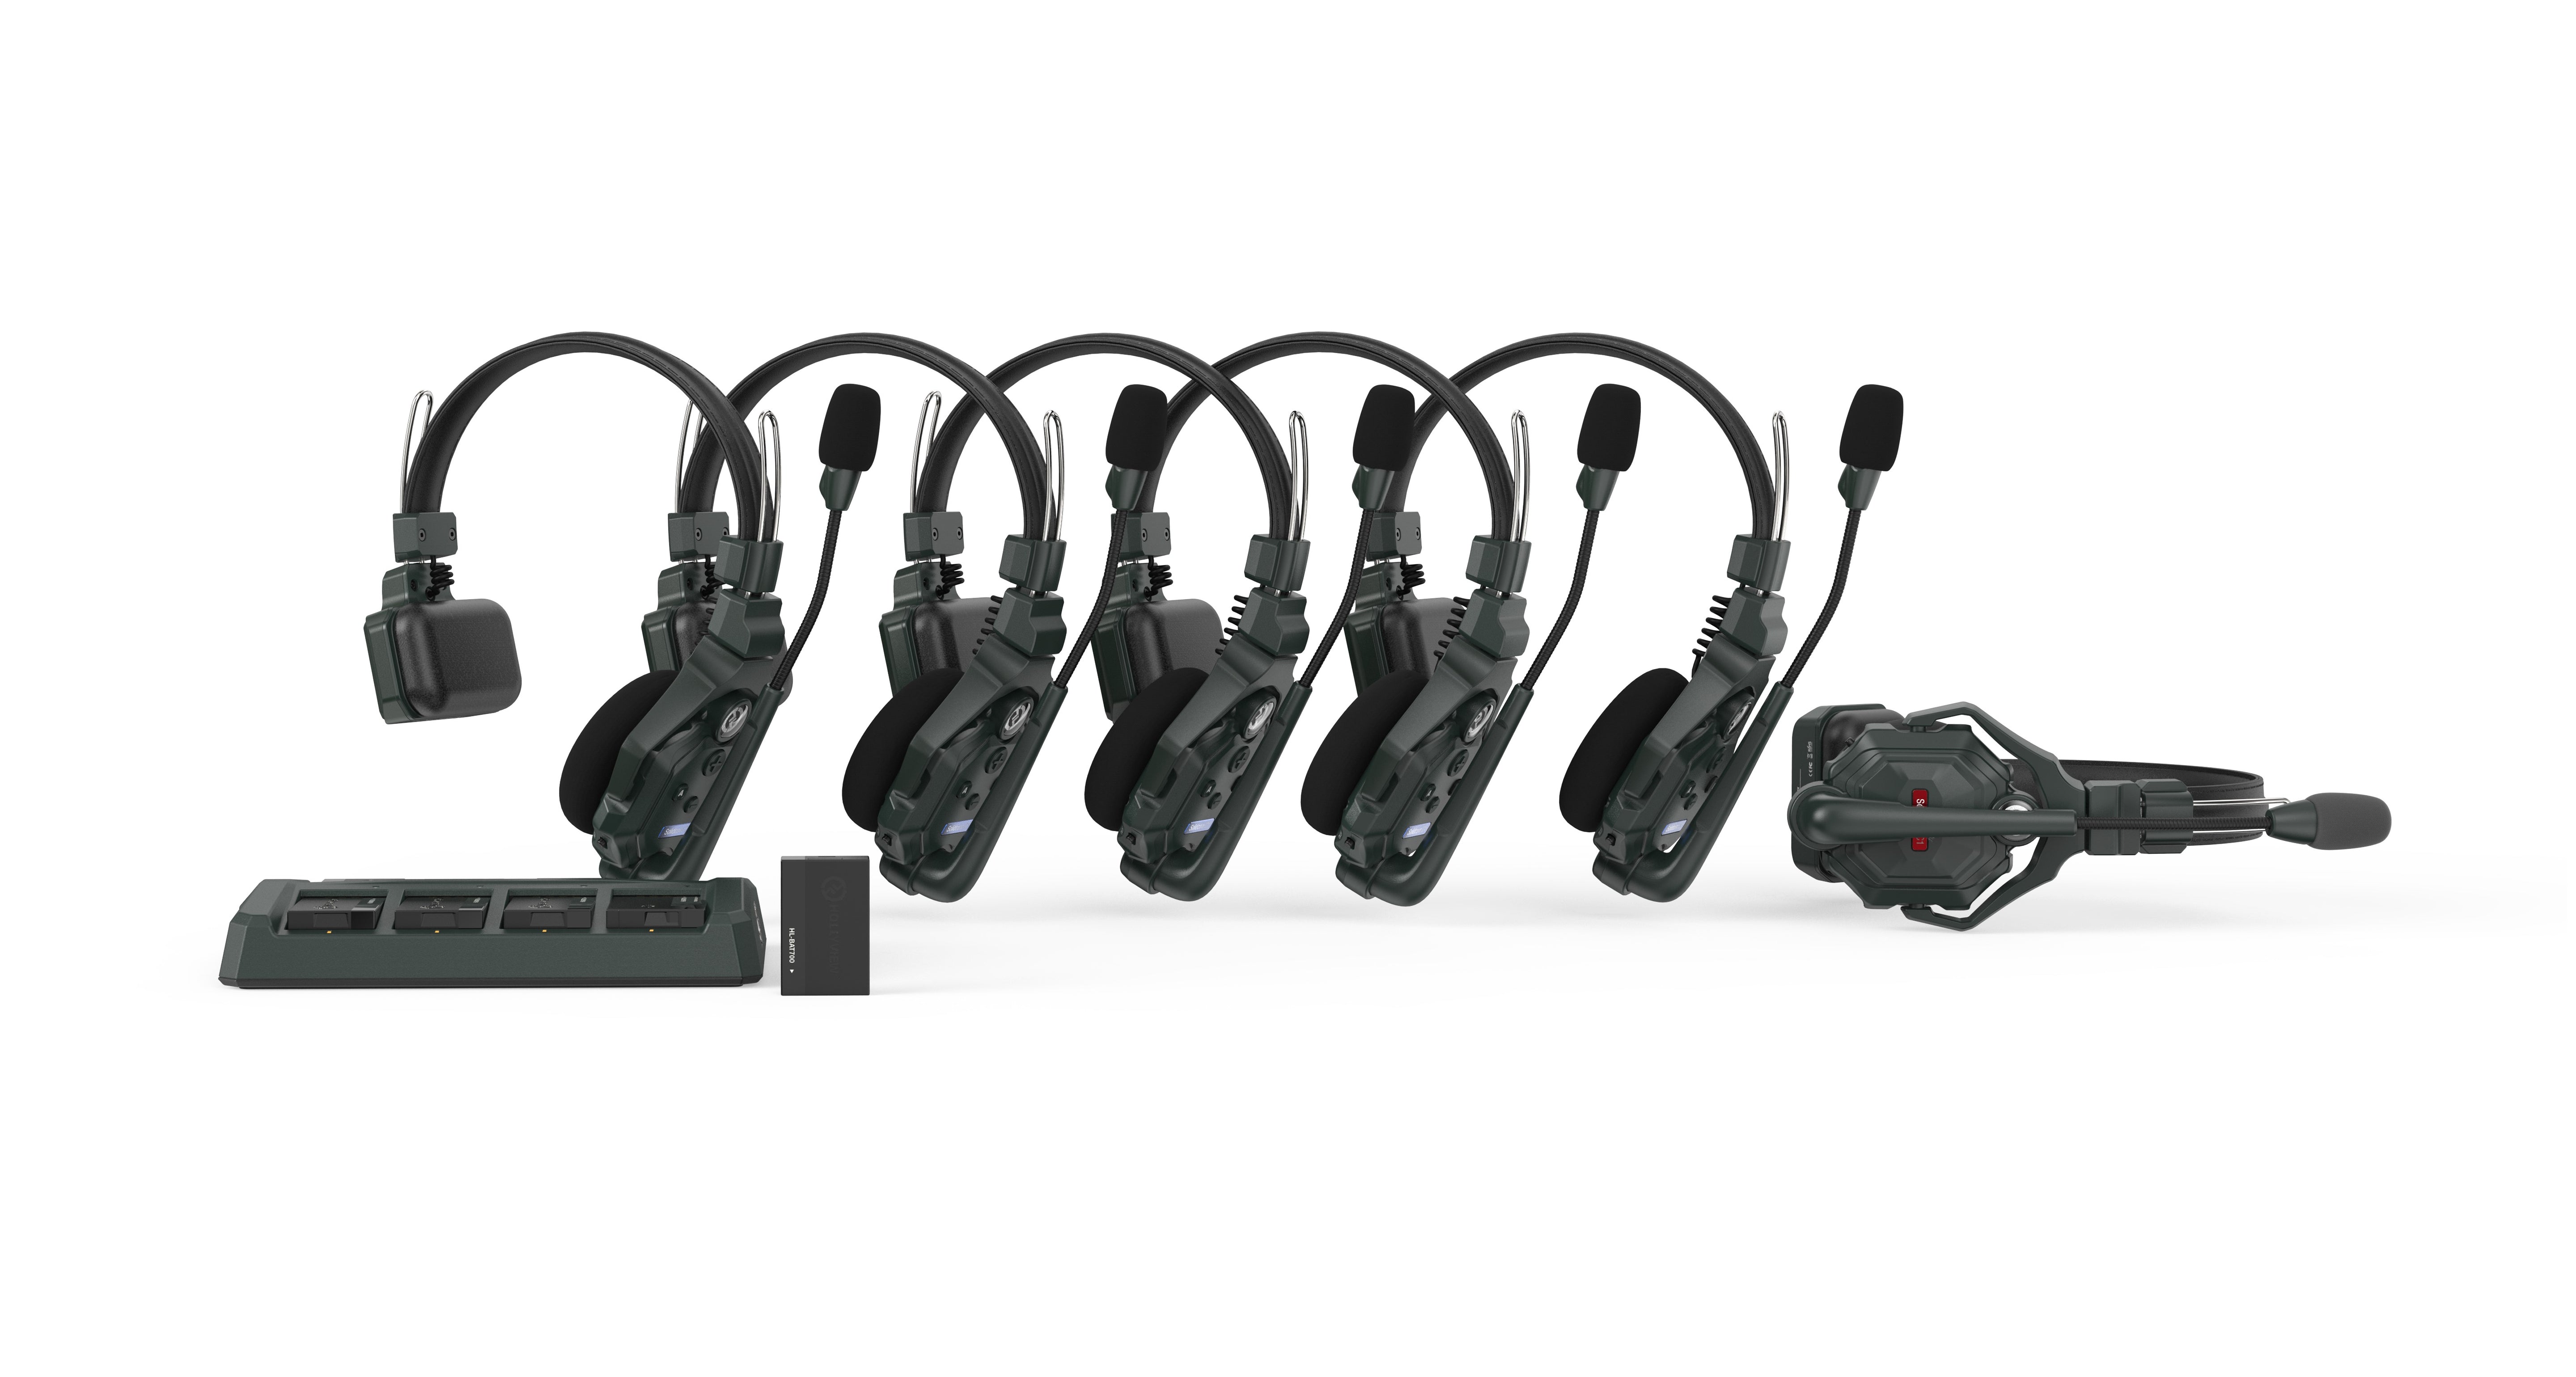 Hollyland Solidcom C1 Full Duplex Wireless Intercom System with 6 headsets HL-Solidcom C1-6S